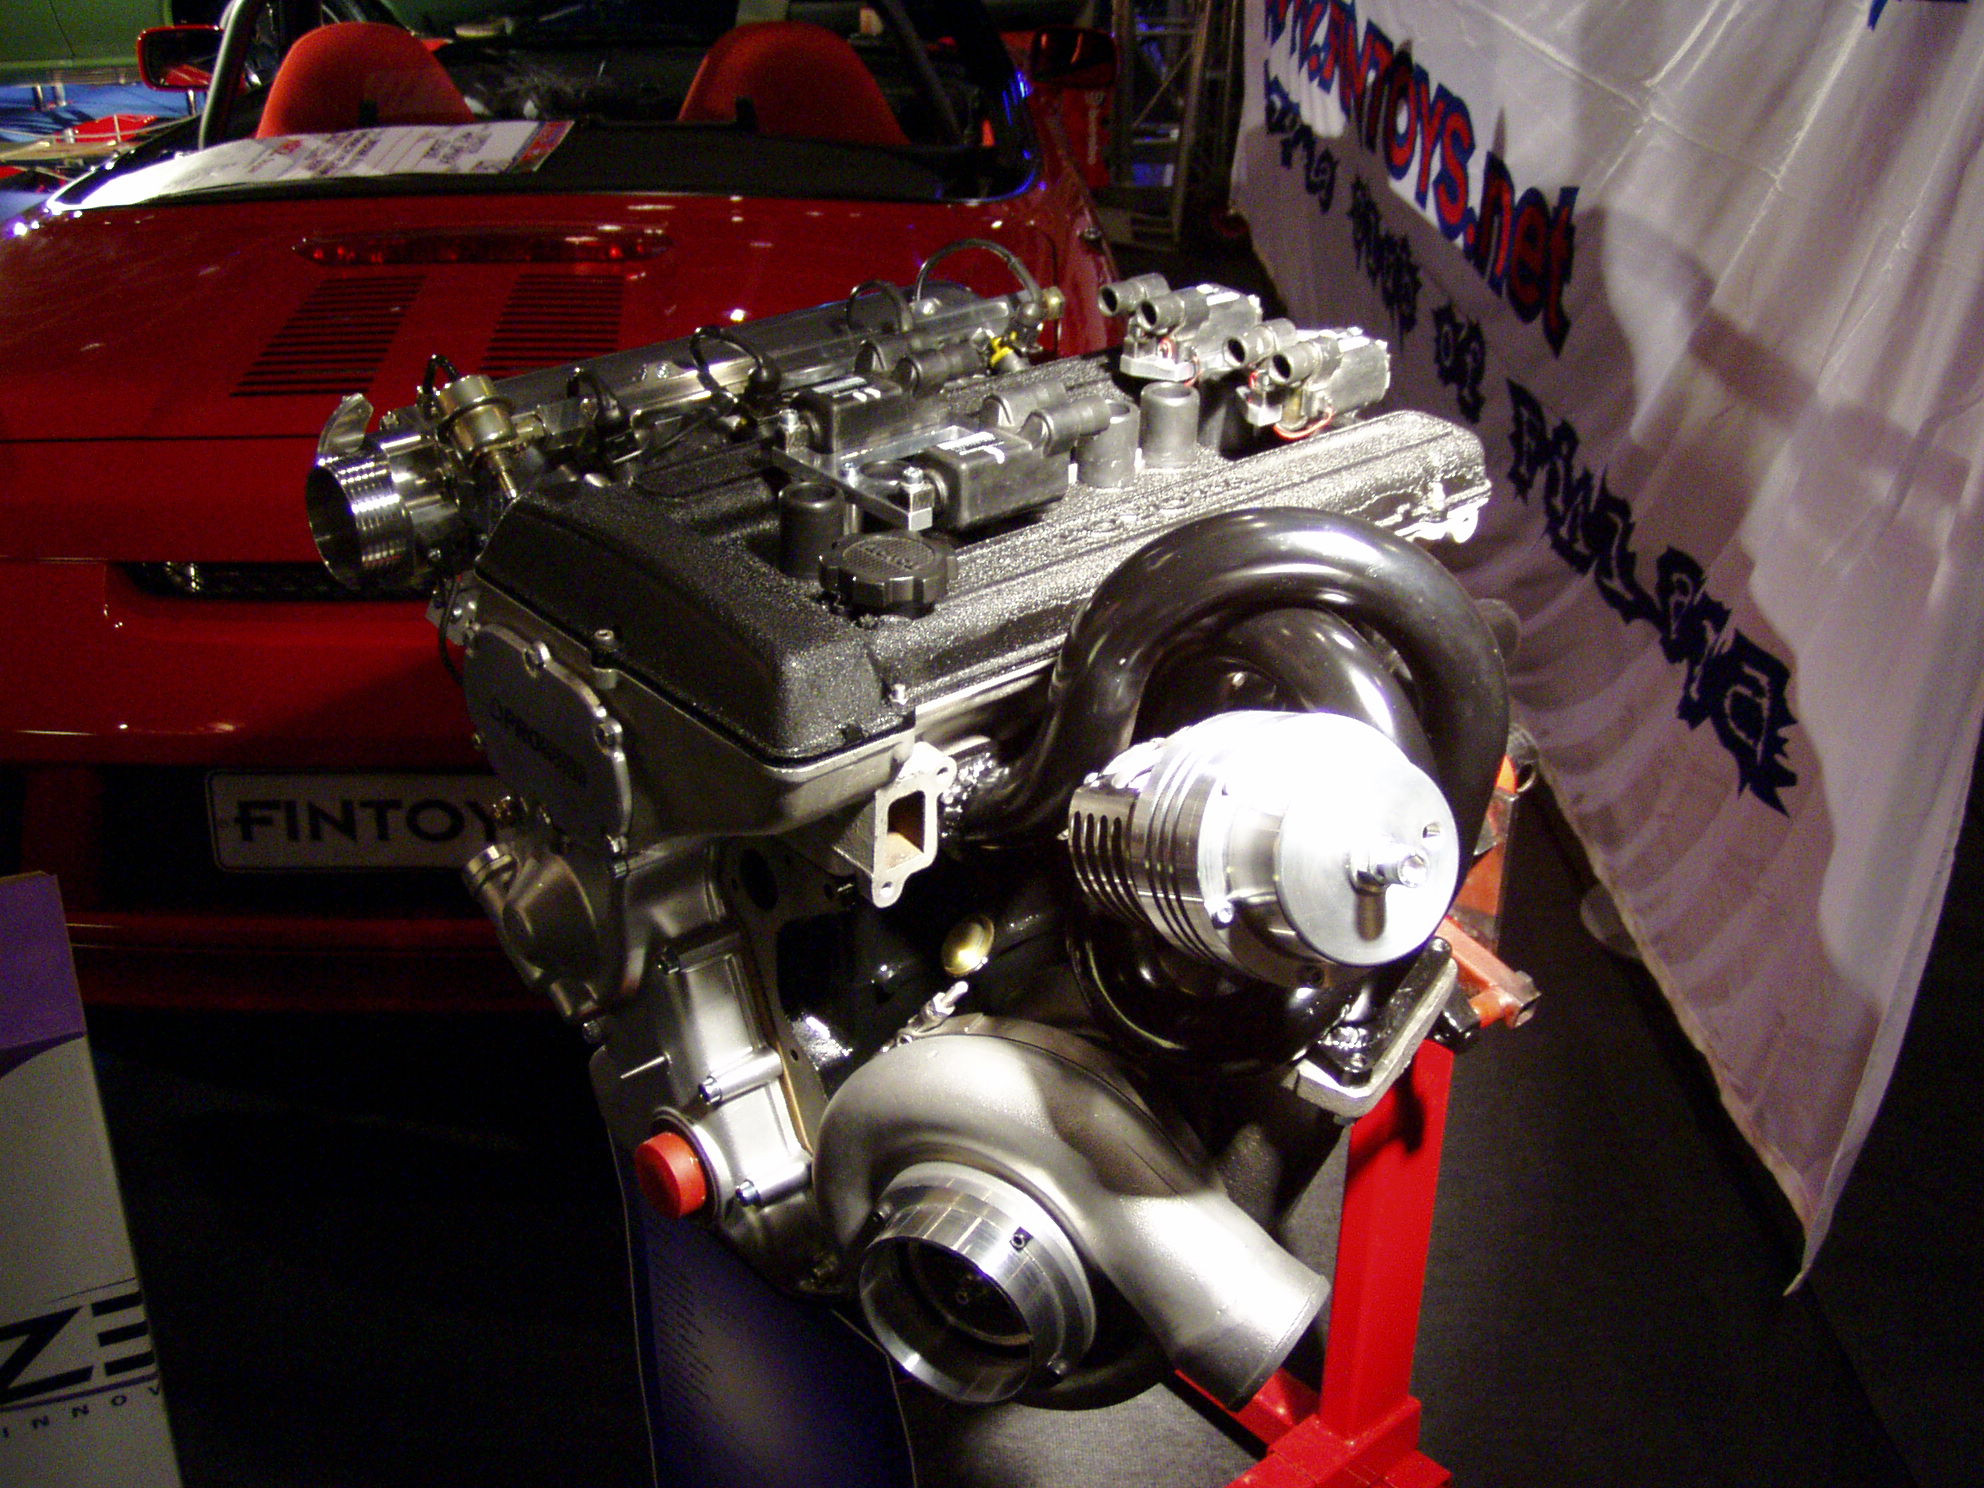 American Car Show 2005, Moottori